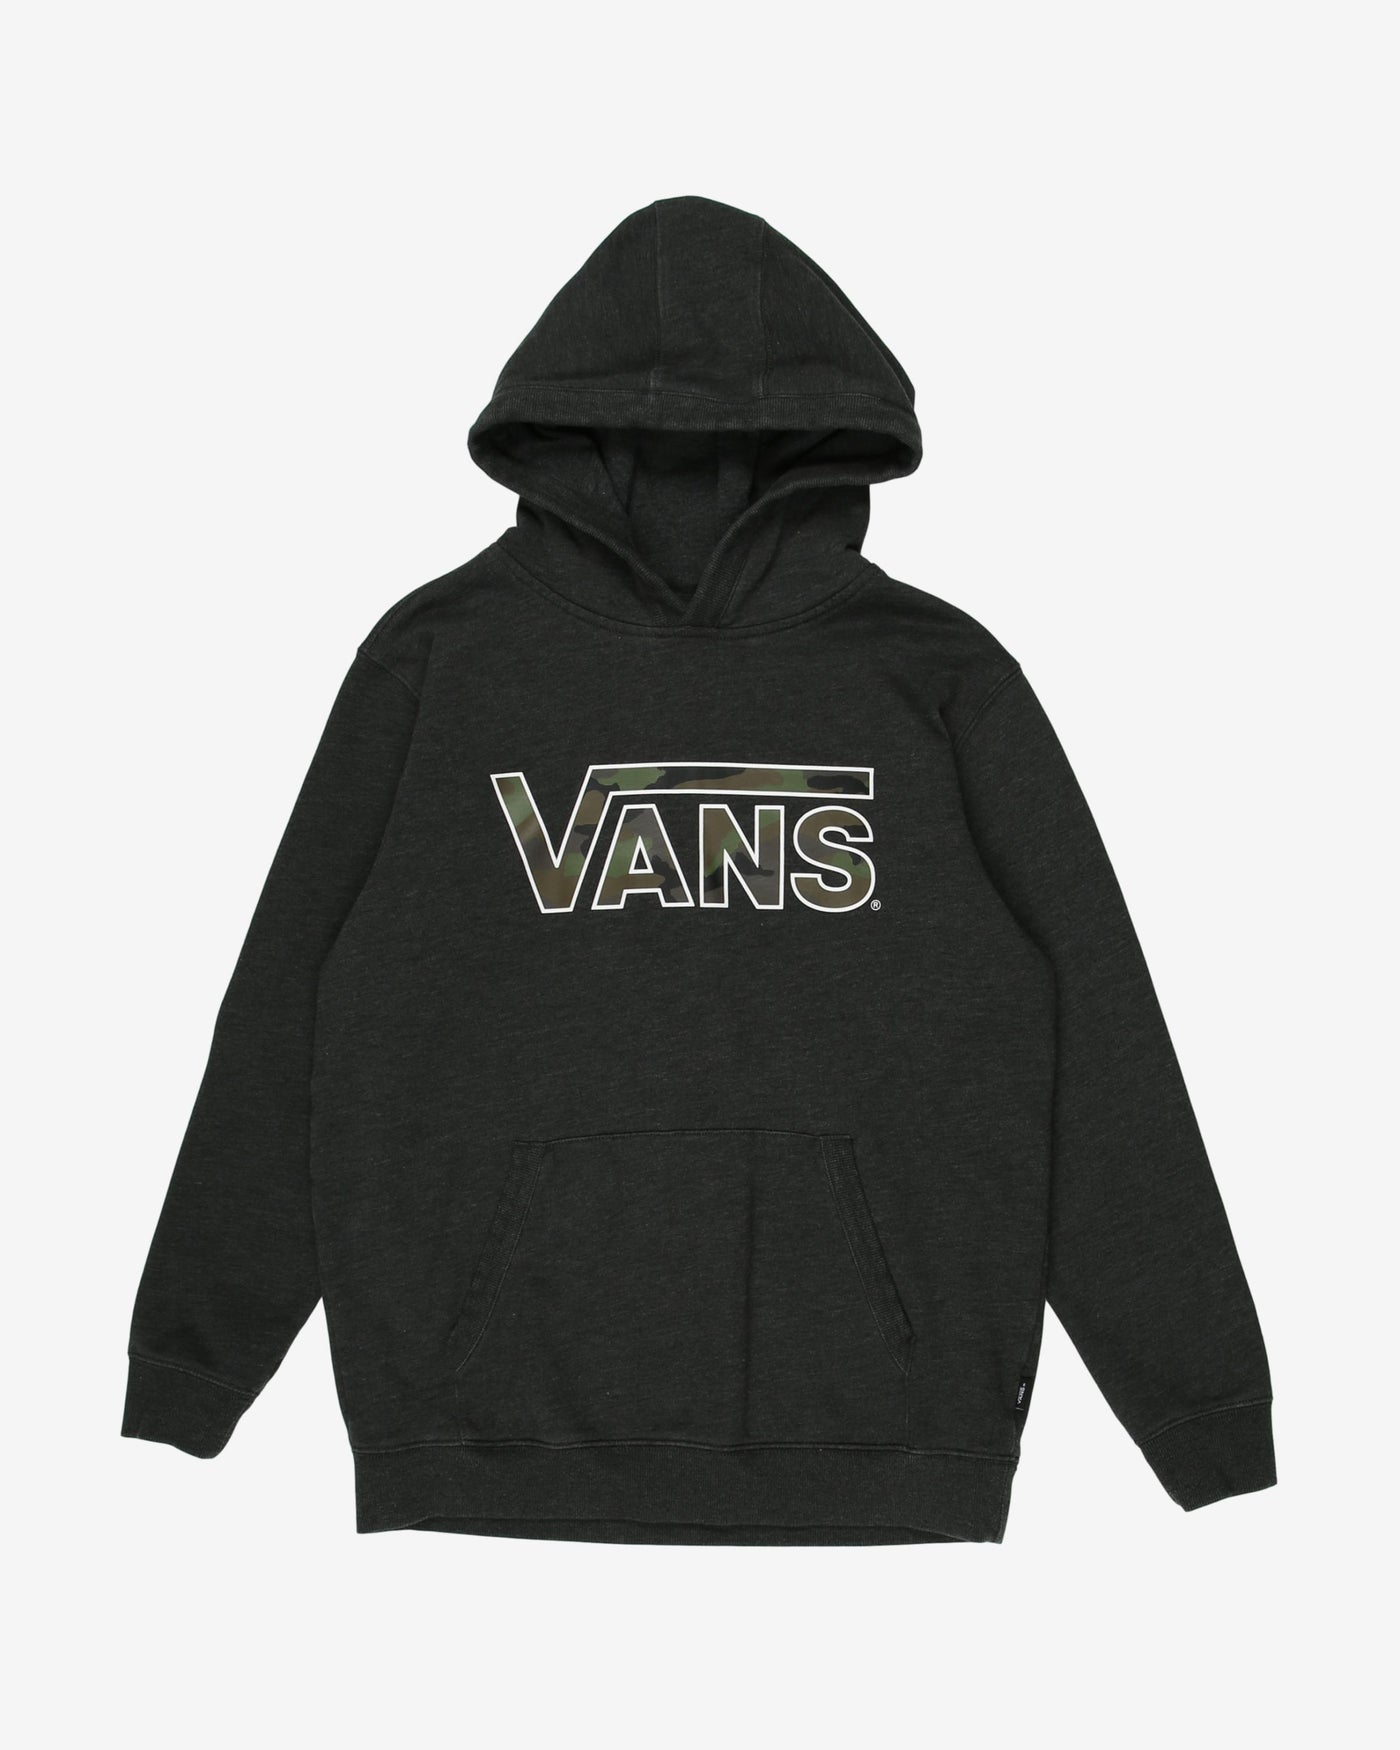 Vintage Vans camo logo in grey hoodie - S